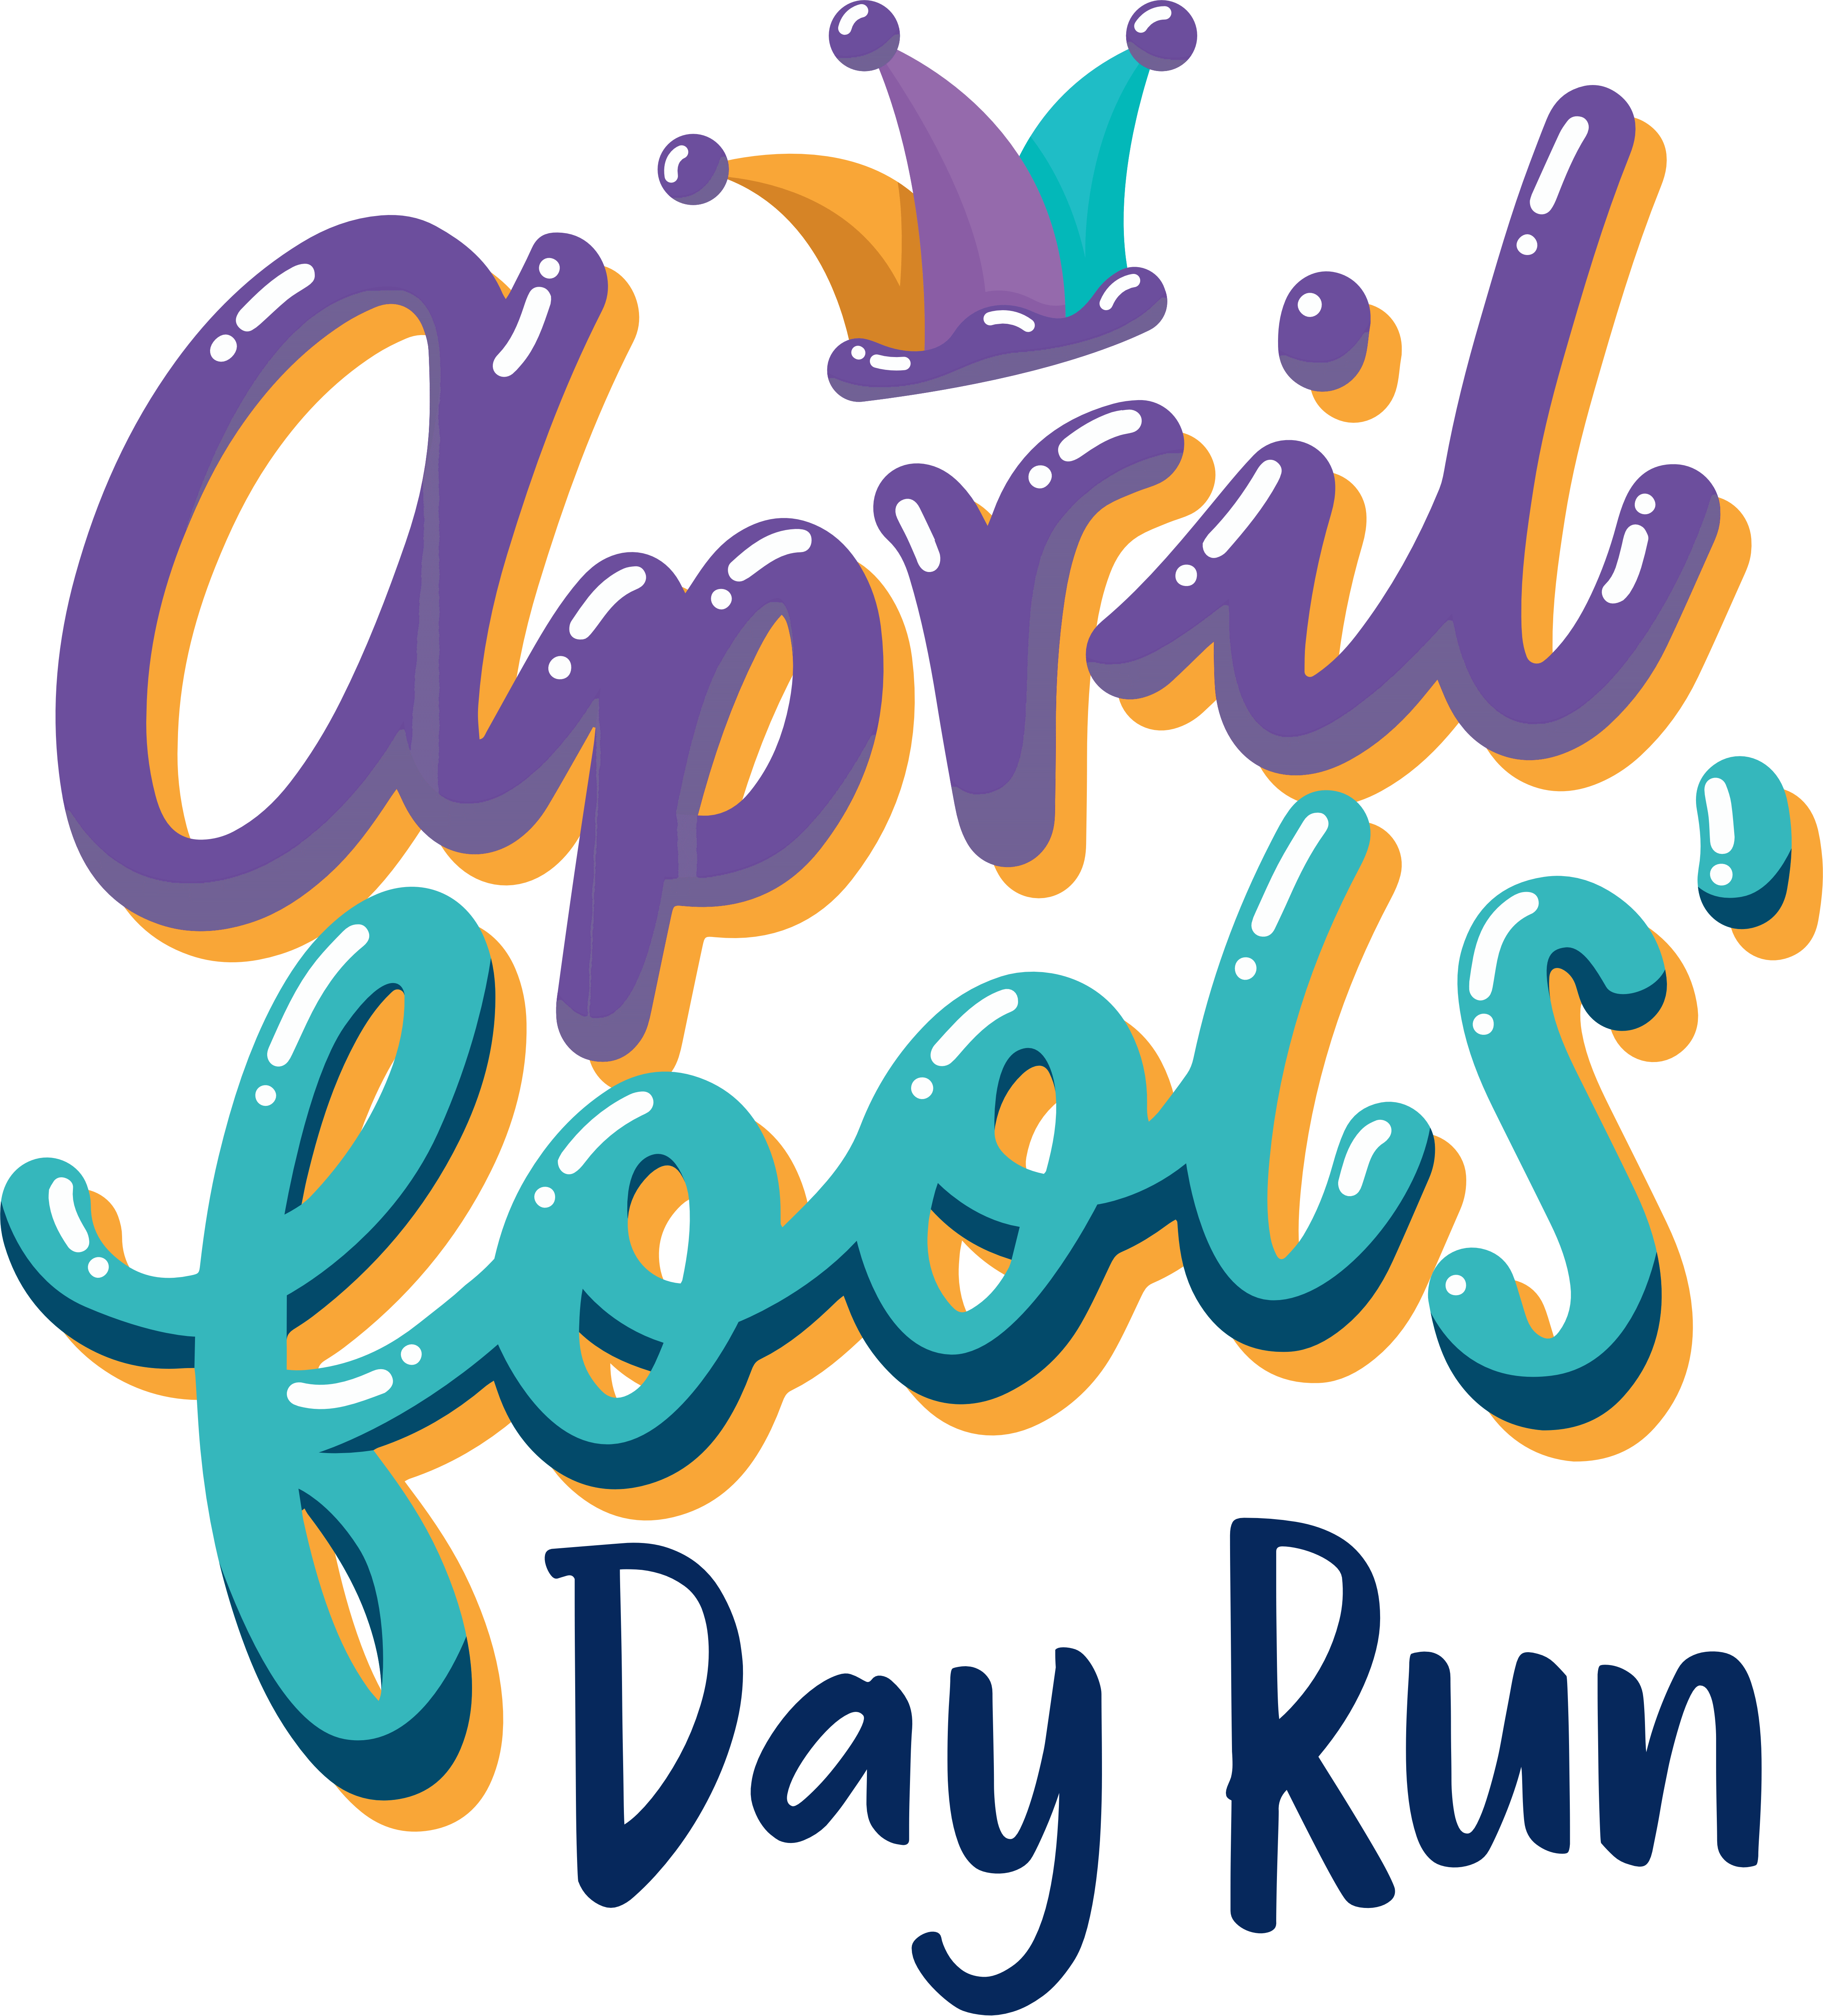 April Fools' Day Run